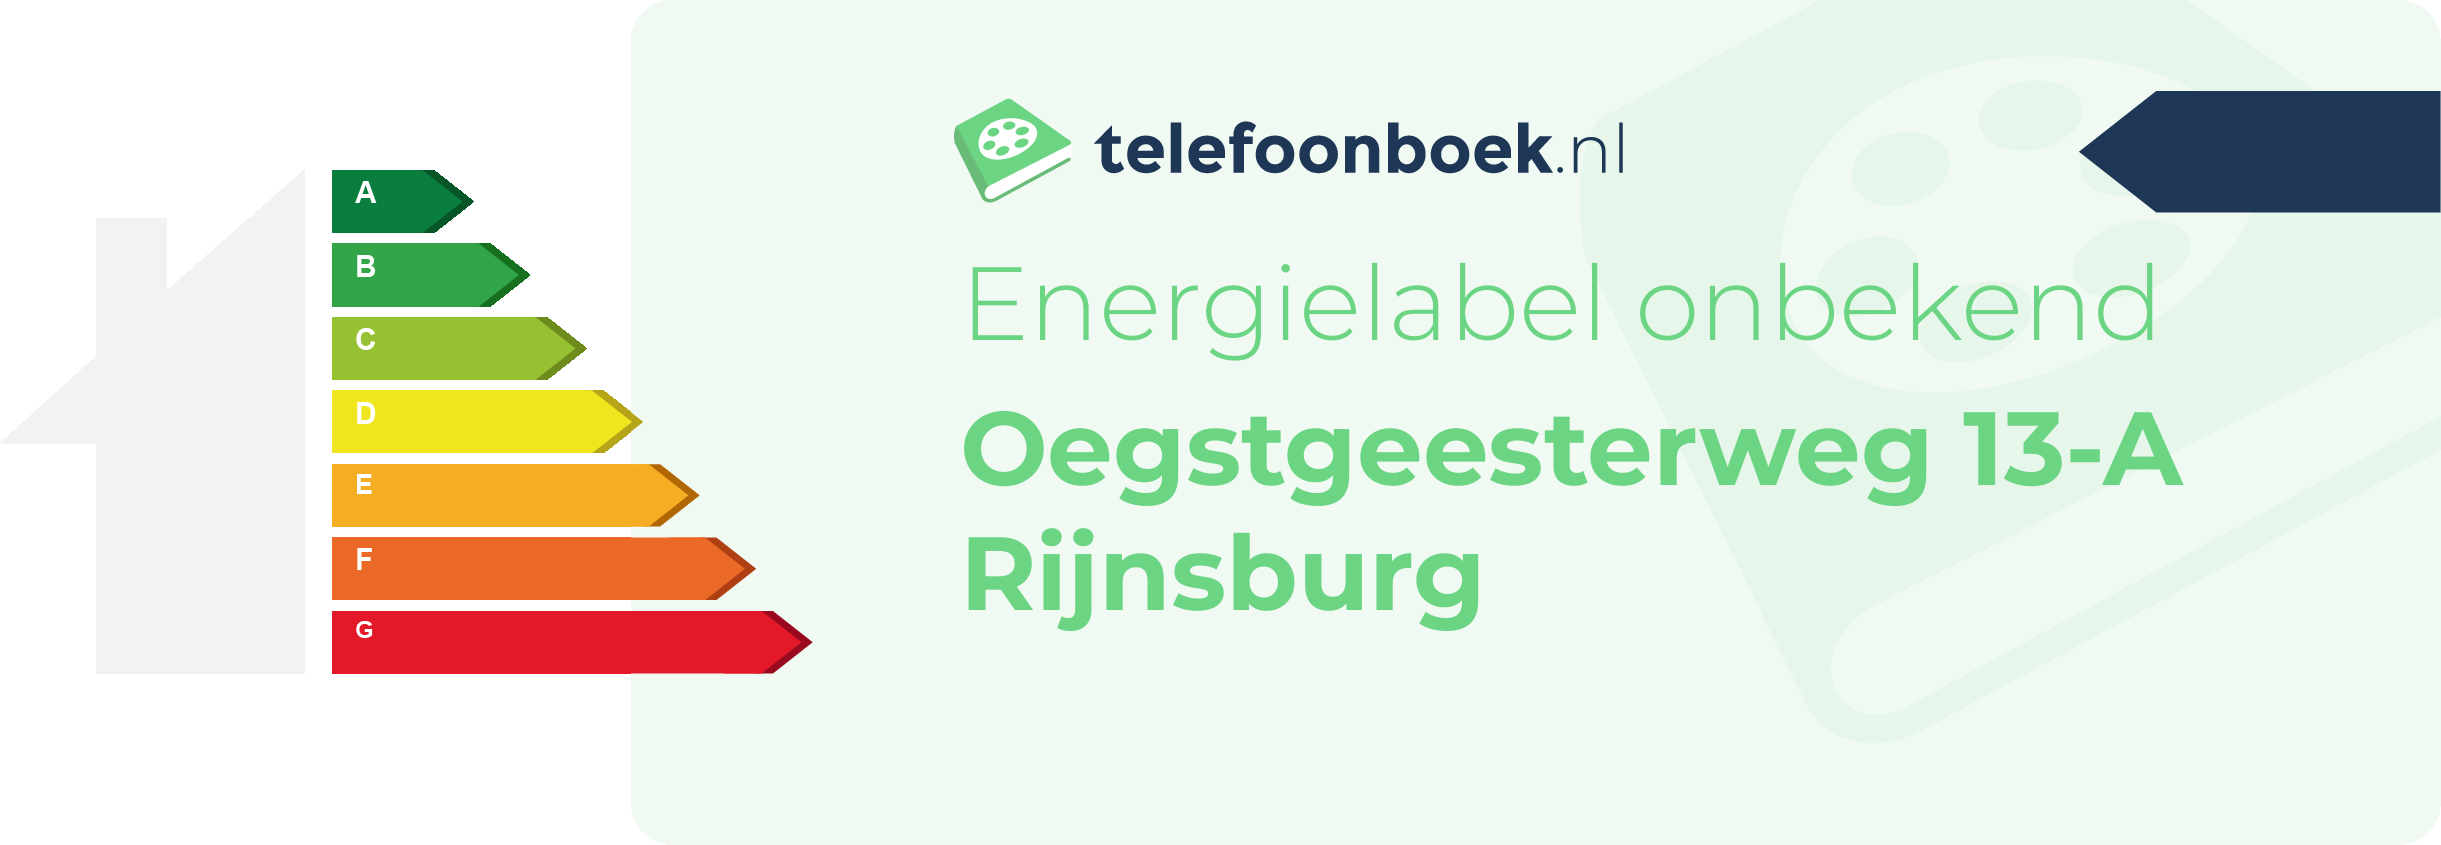 Energielabel Oegstgeesterweg 13-A Rijnsburg